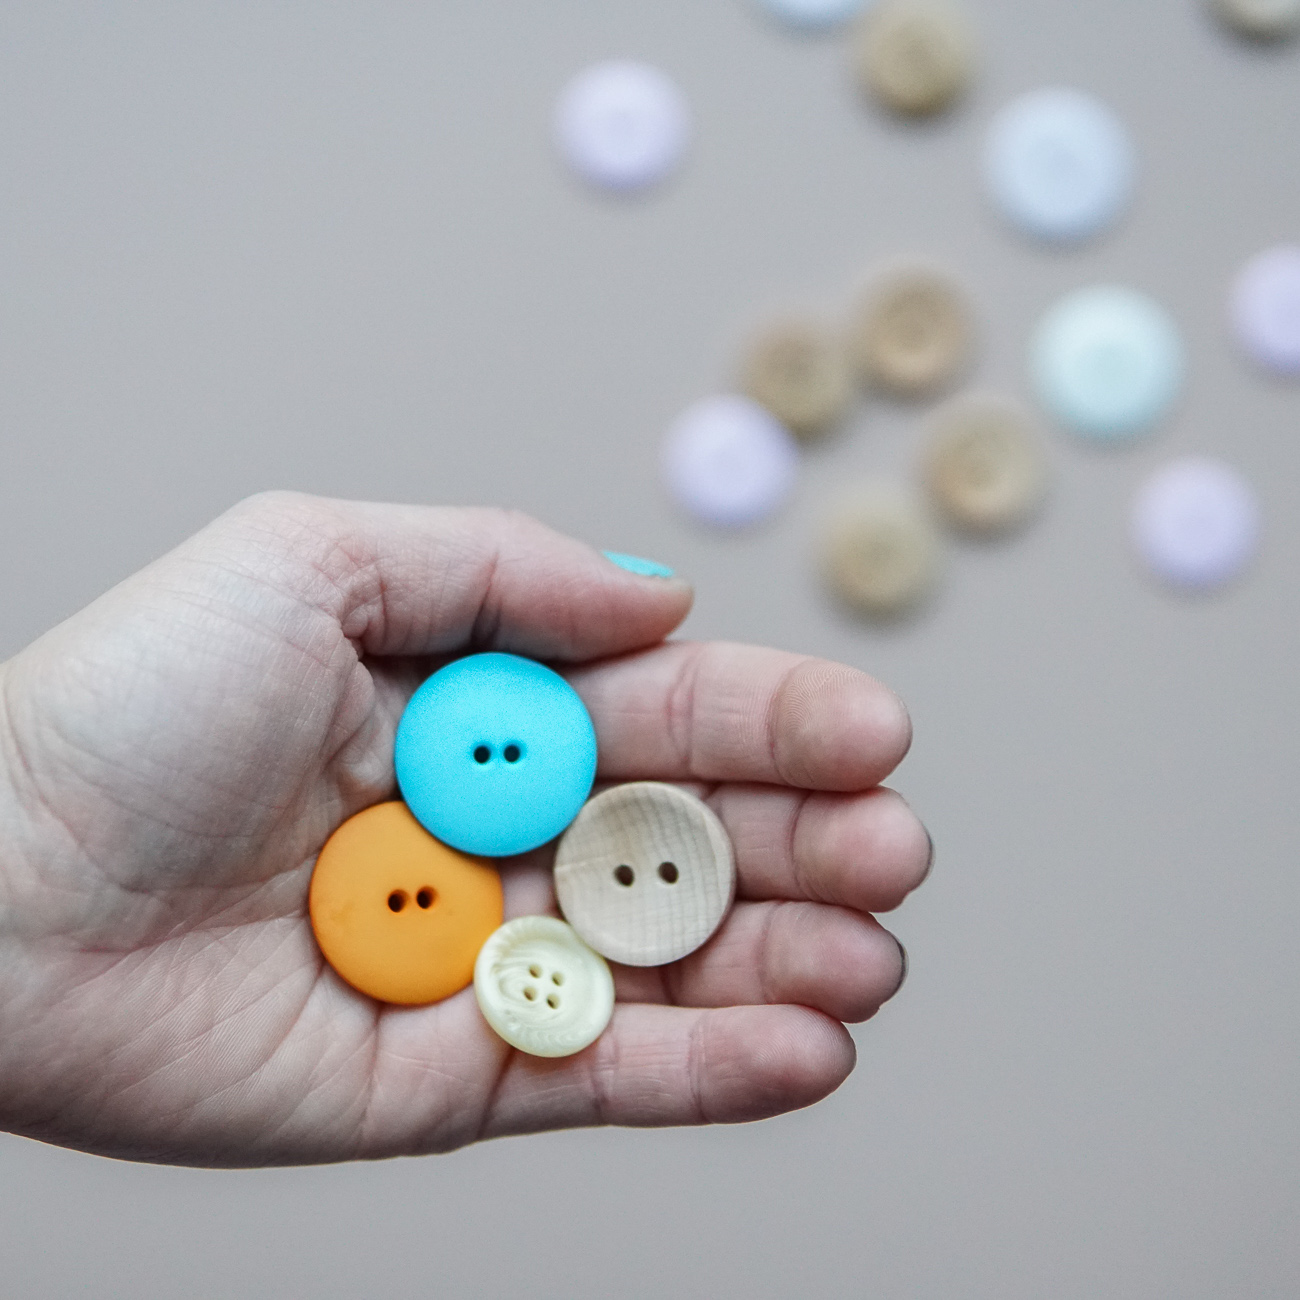 nettbutikk knapper - Turquoise plastic button | Matt round plastic button - by HipKnitShop - 29/10/2018